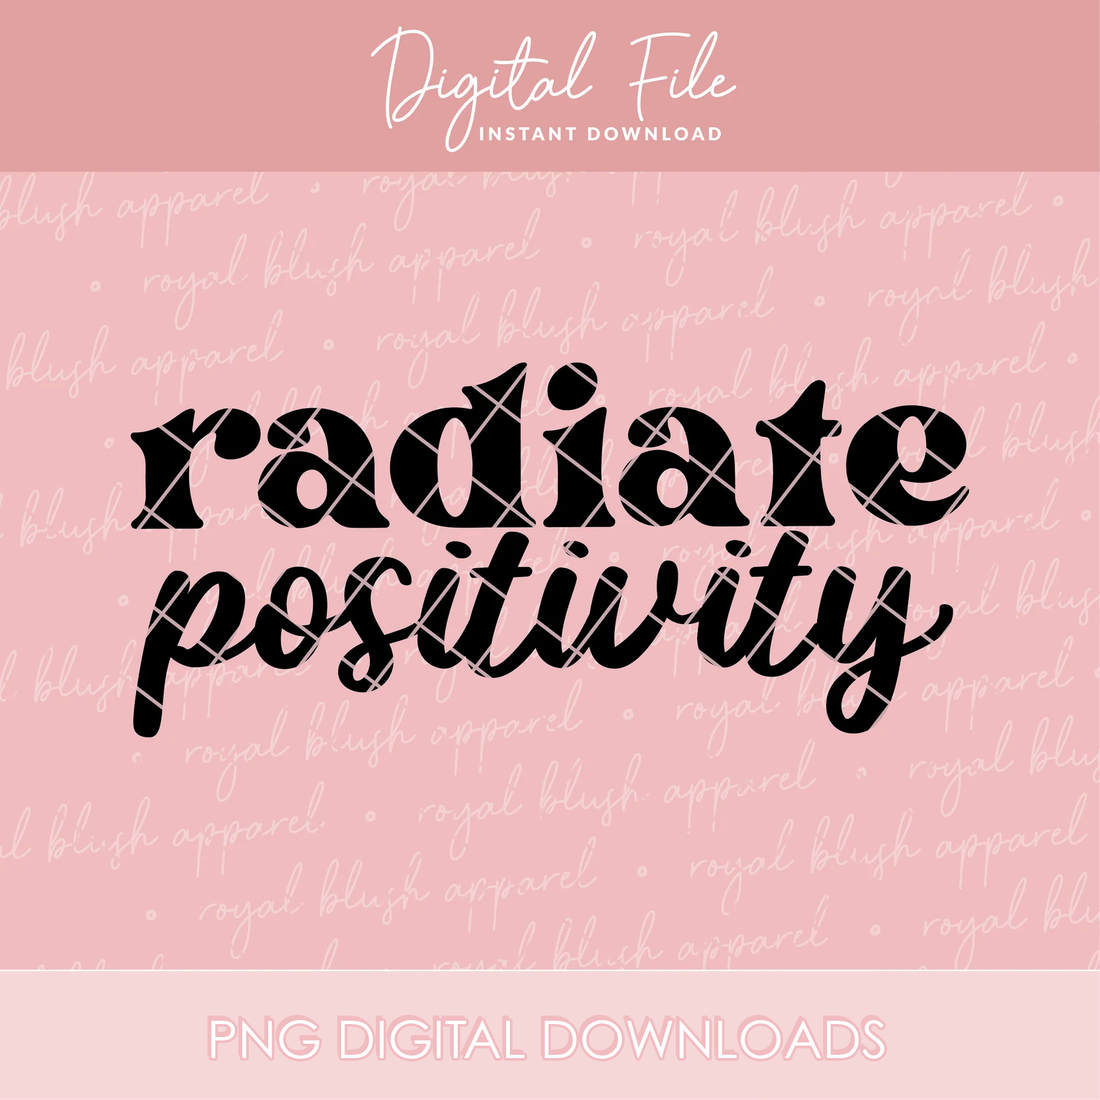 Radiate Positivity Png